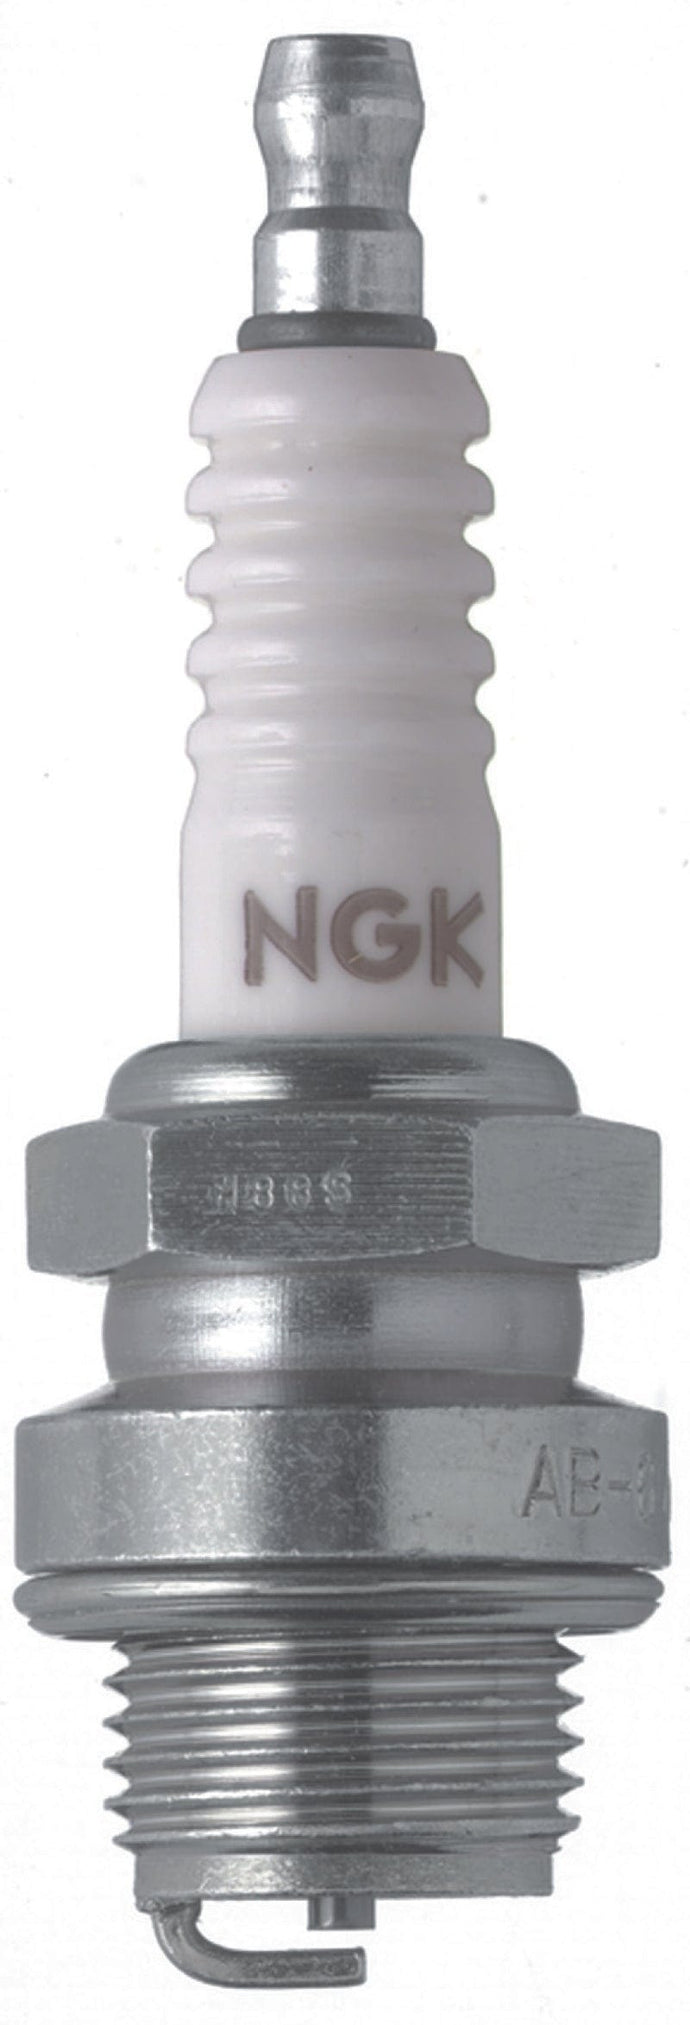 NGK NGK3020